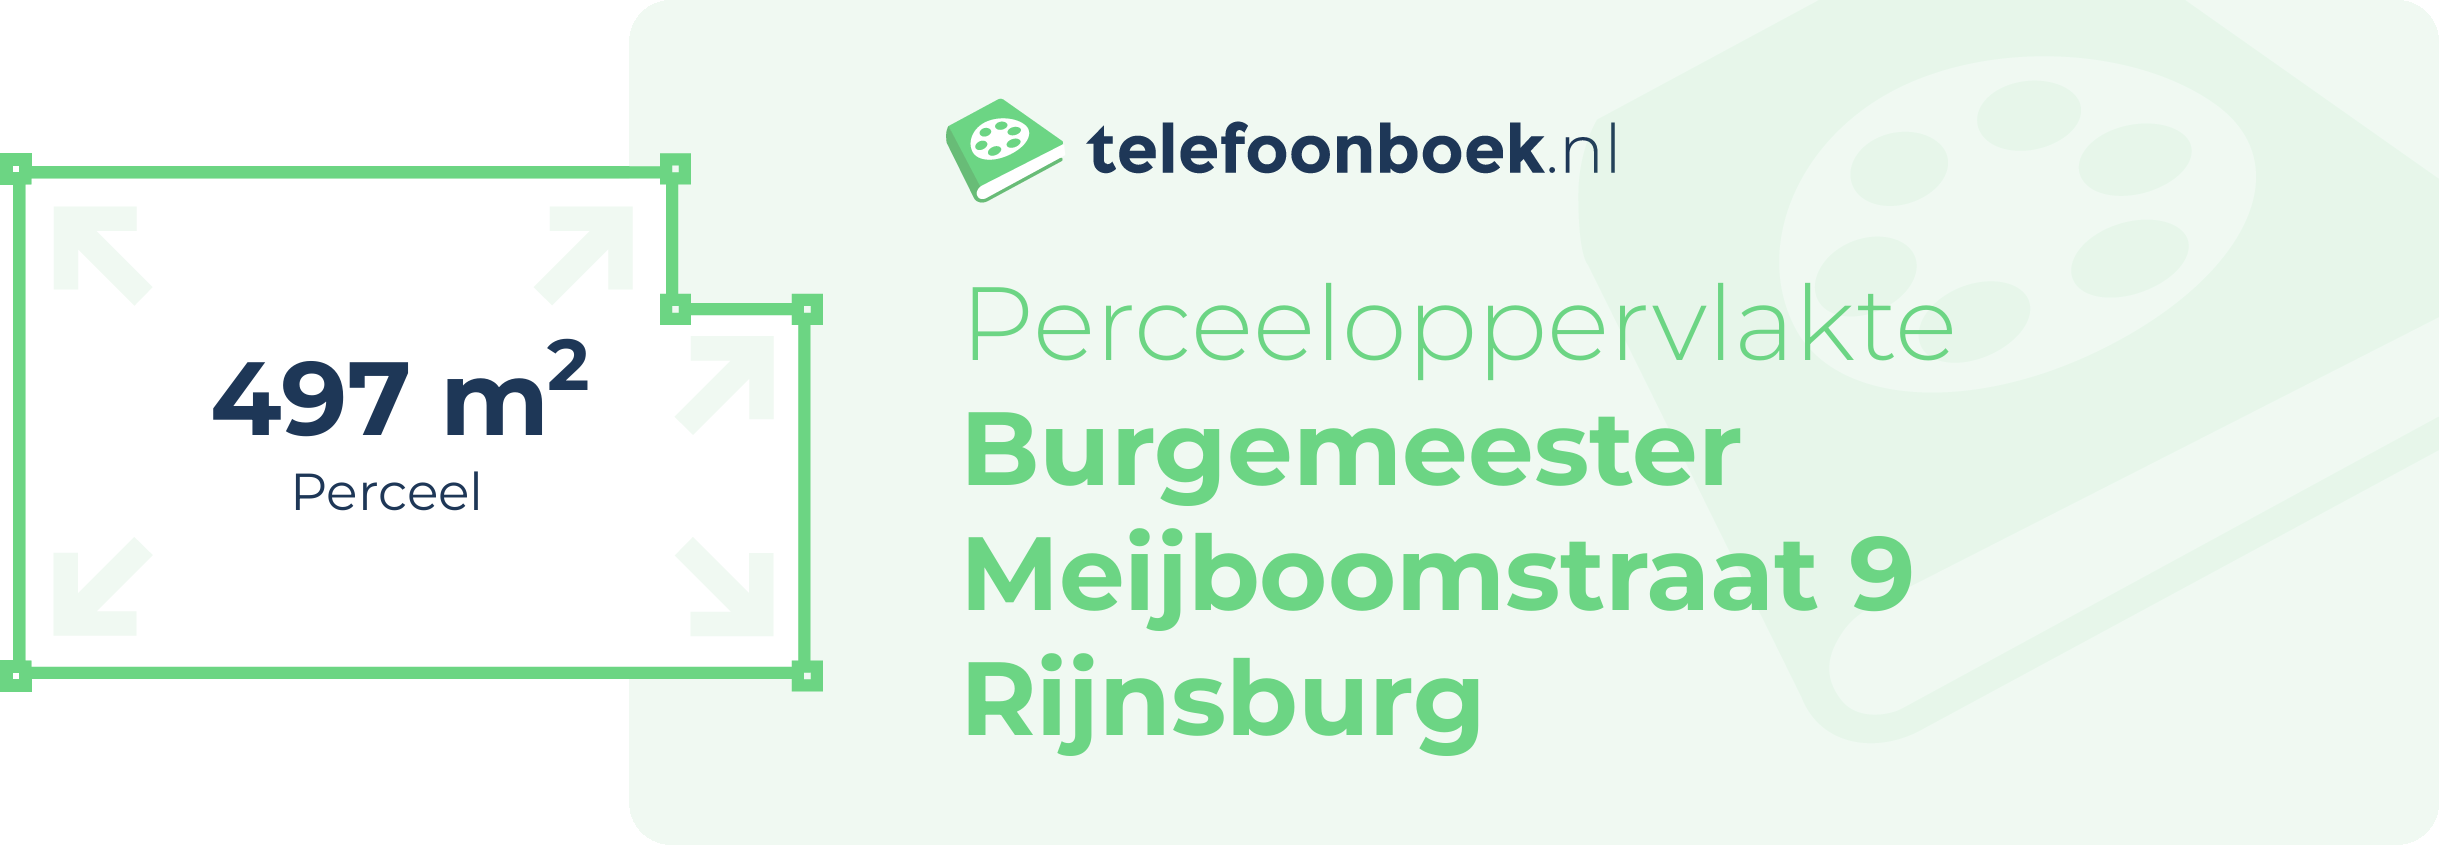 Perceeloppervlakte Burgemeester Meijboomstraat 9 Rijnsburg